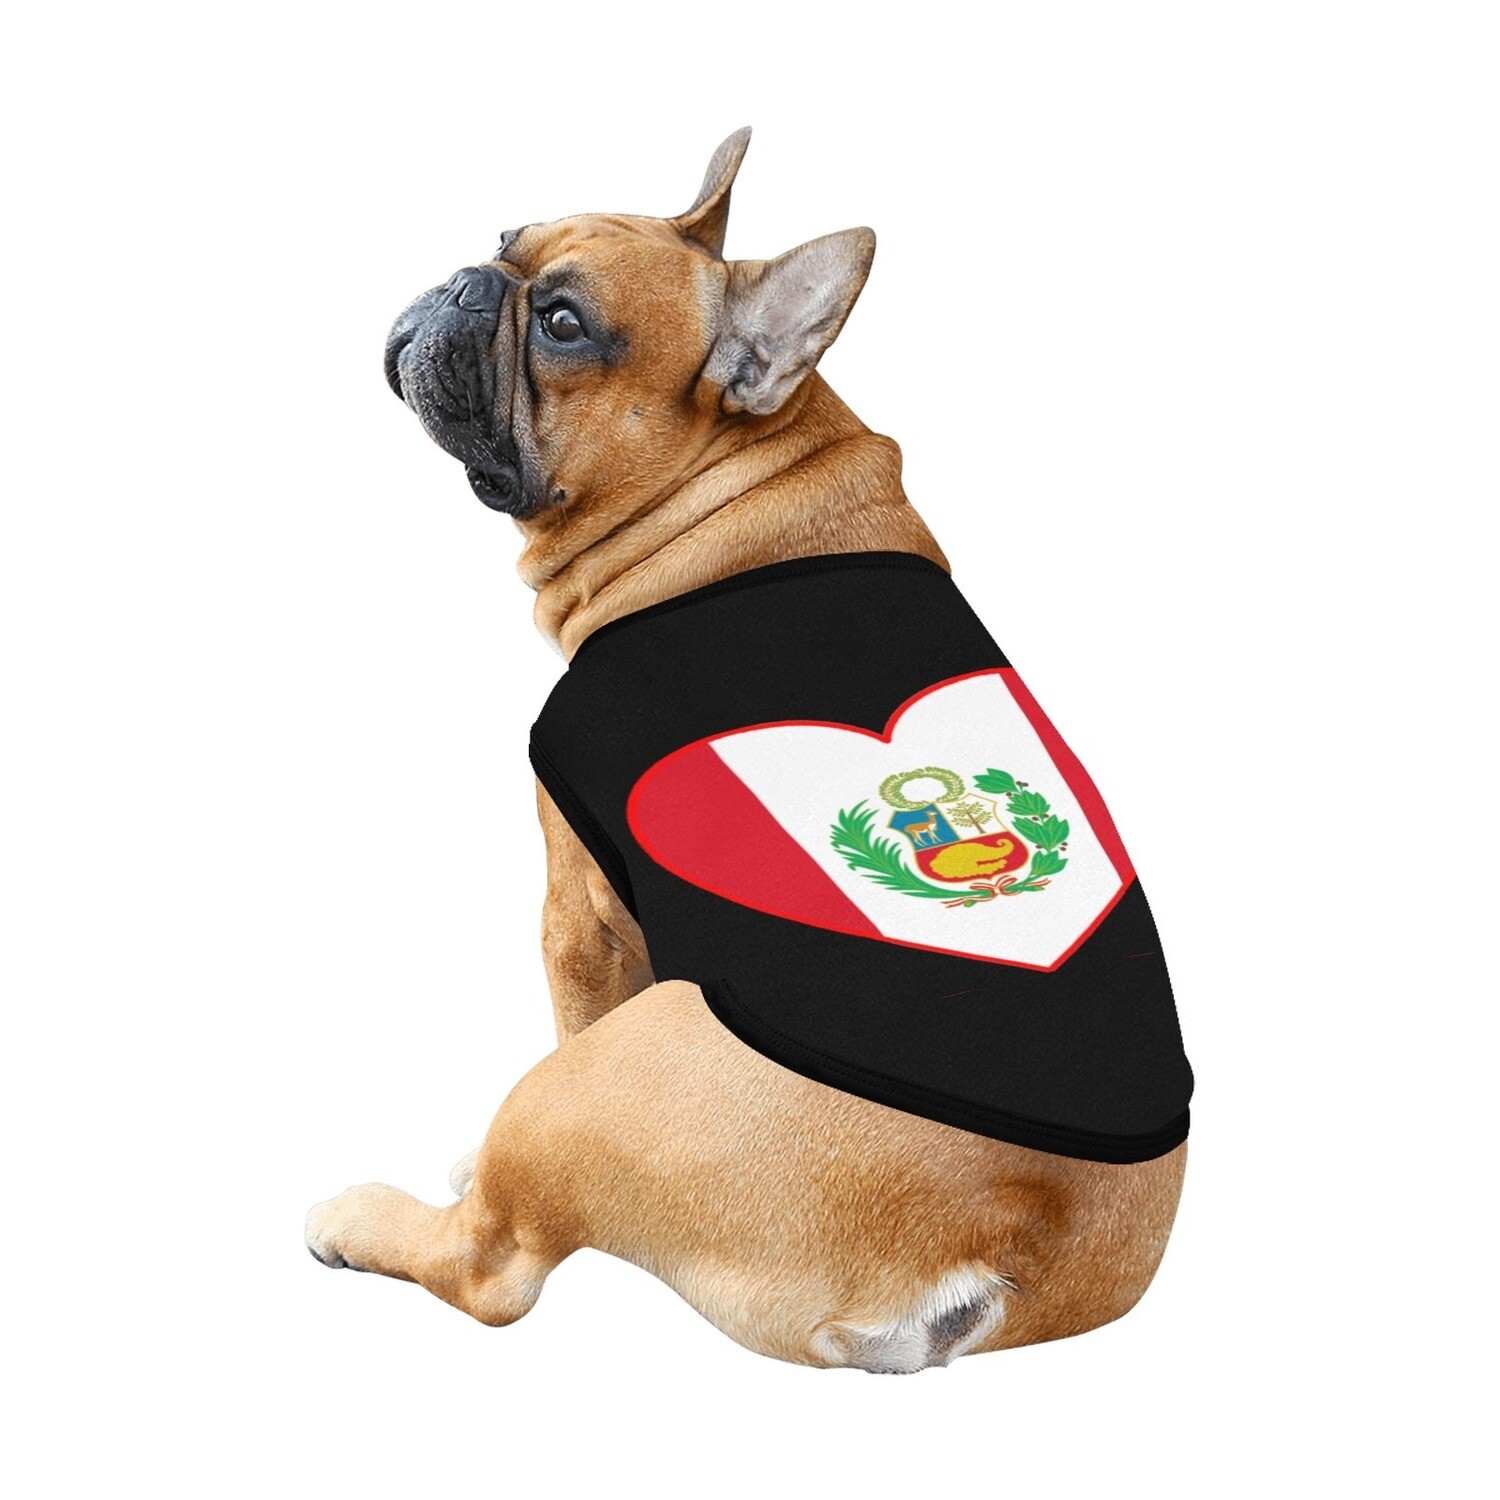 🐕 🇵🇪 I love Peru dog t-shirt, dog gift, dog tank top, dog shirt, dog clothes, gift, 7 sizes XS to 3XL, Peruvian flag, heart shape, black